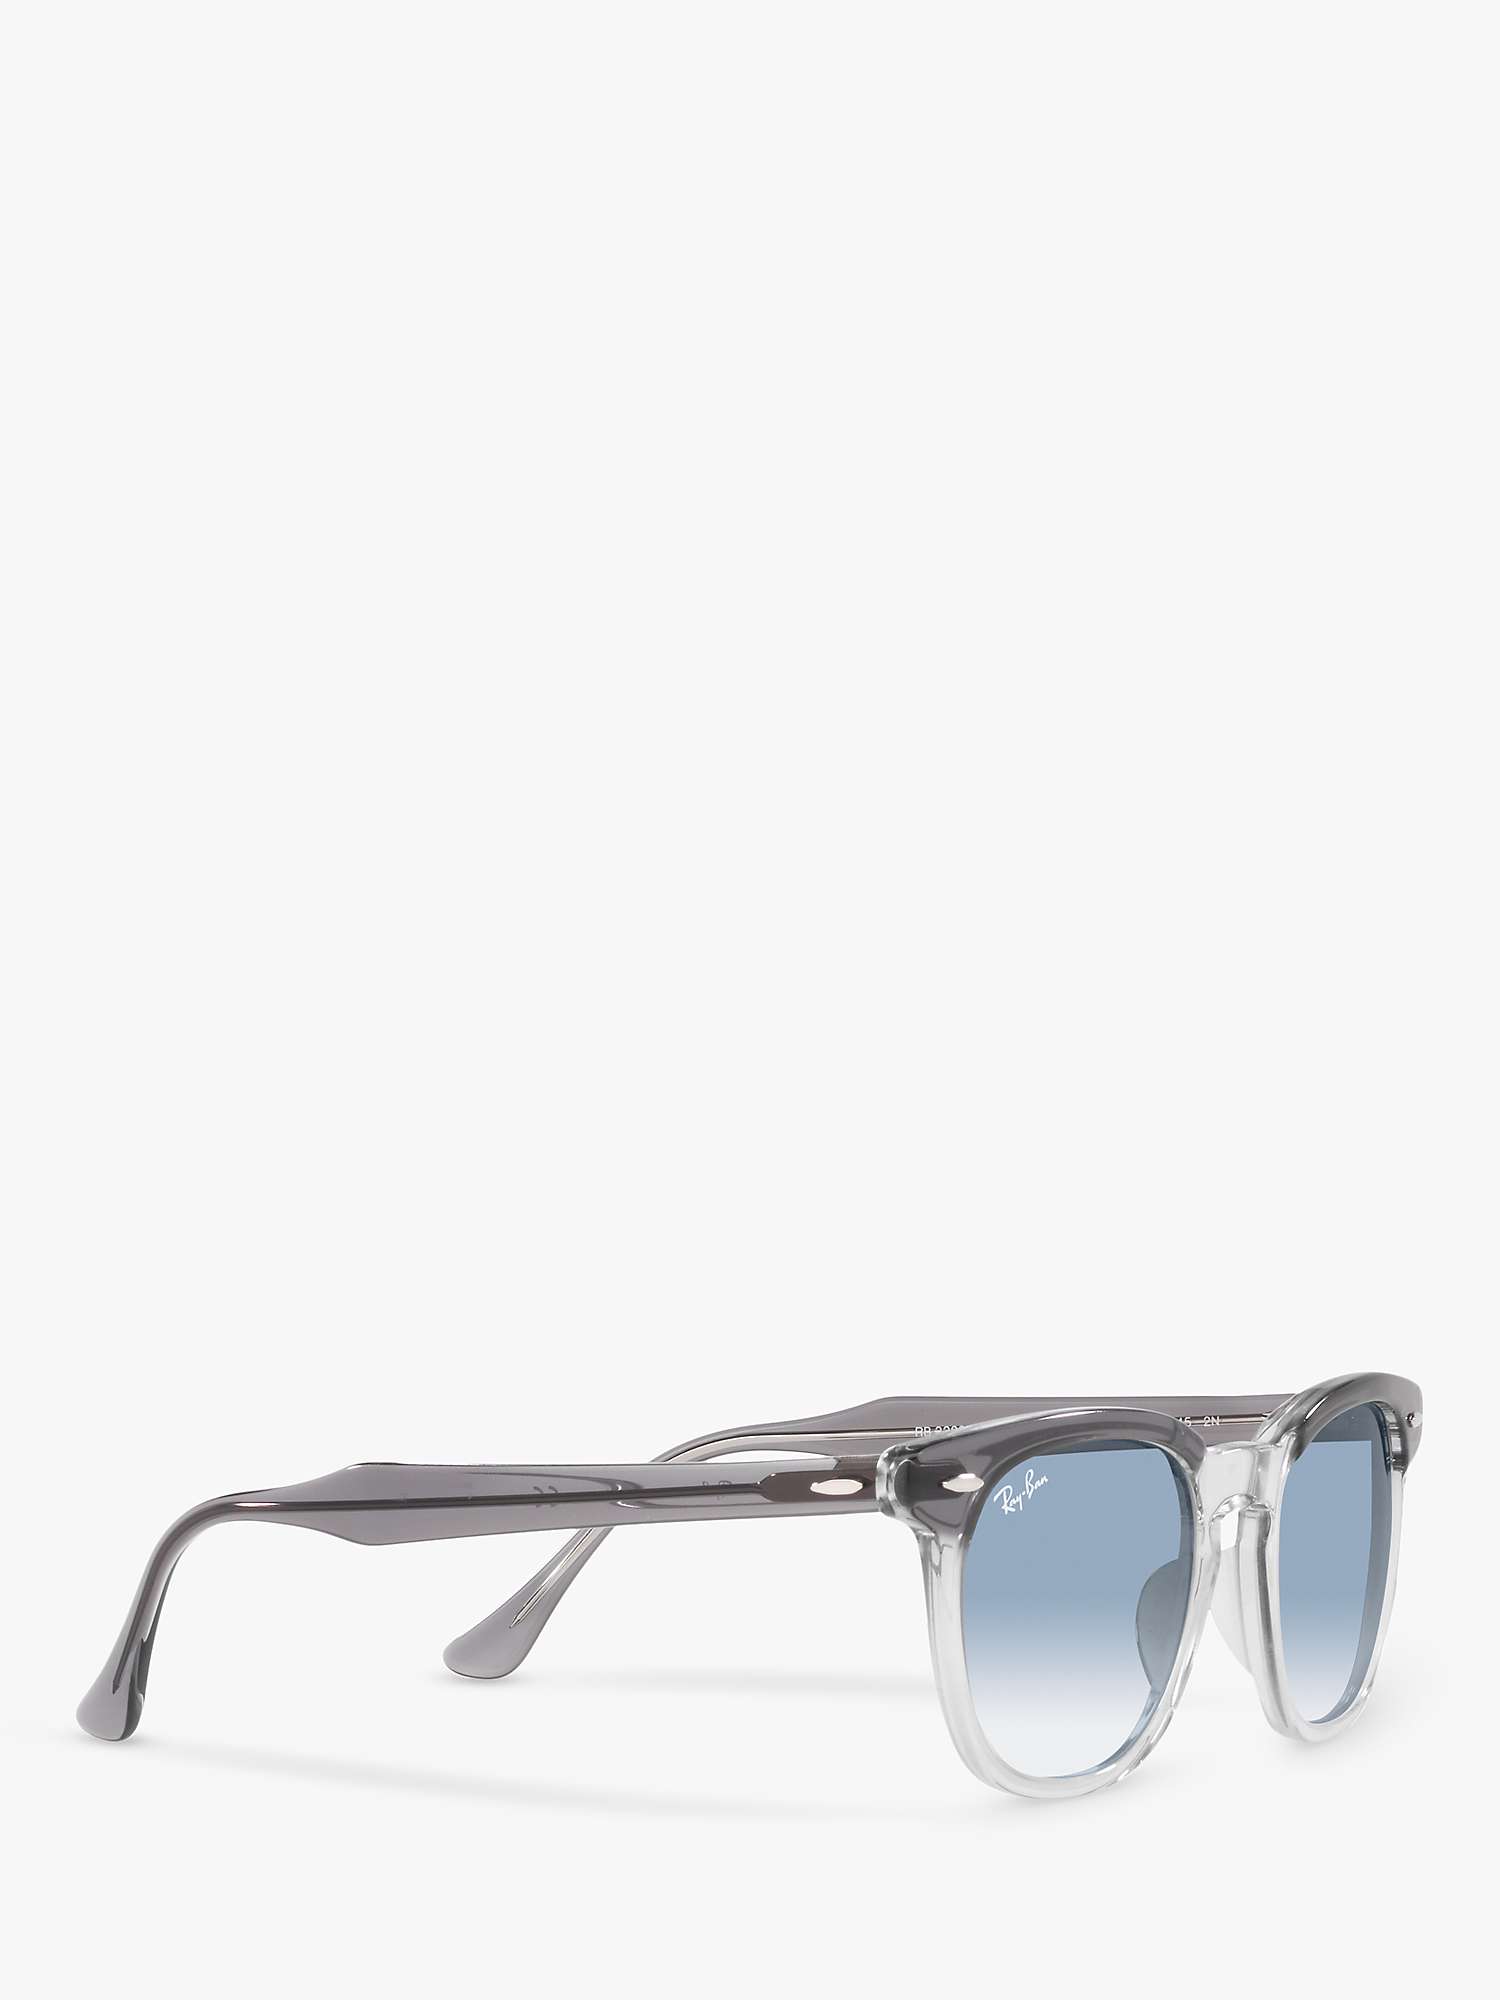 Buy Ray-Ban RB2298 Unisex Hawkeye Sunglasses, Transparent Grey/Blue Online at johnlewis.com